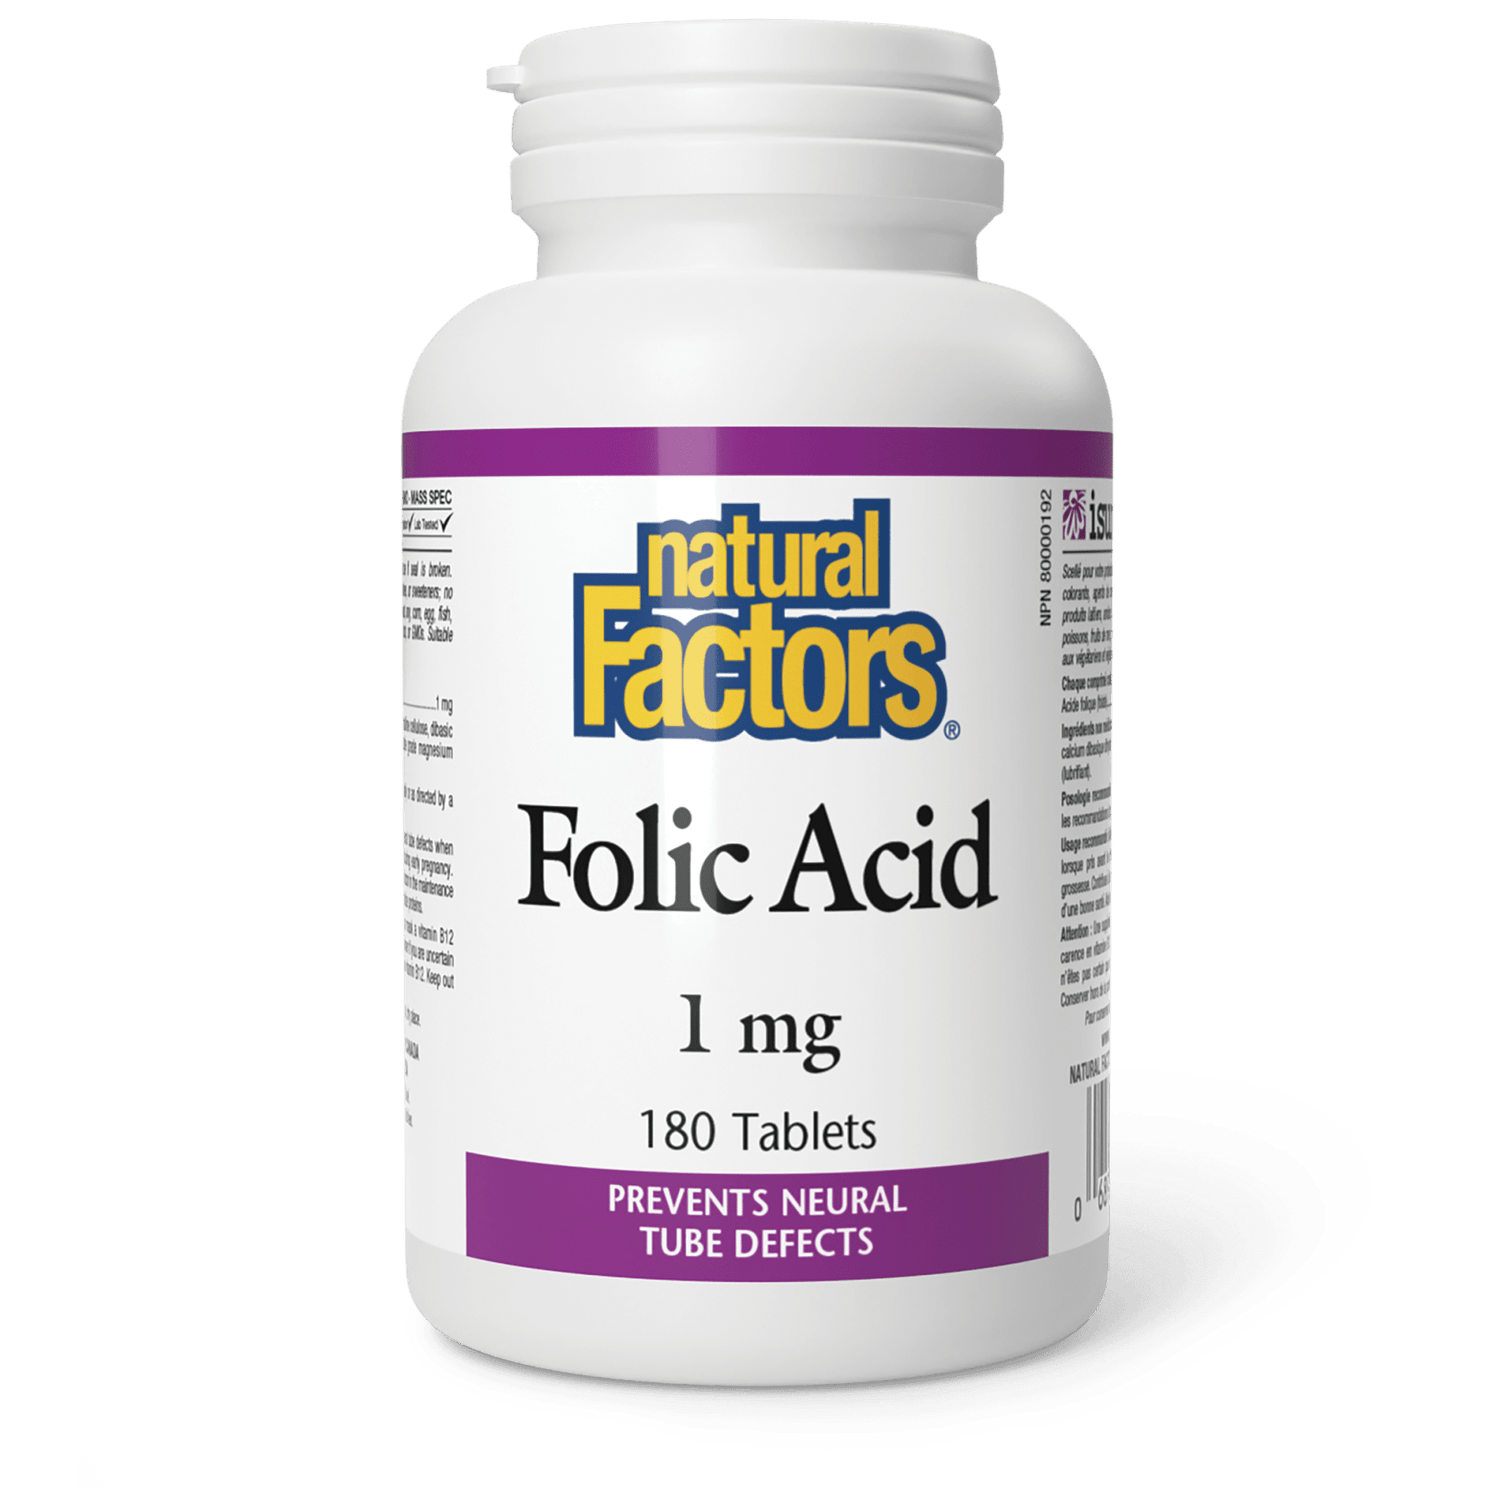 Folic Acid 1 mg, Natural Factors|v|image|1271